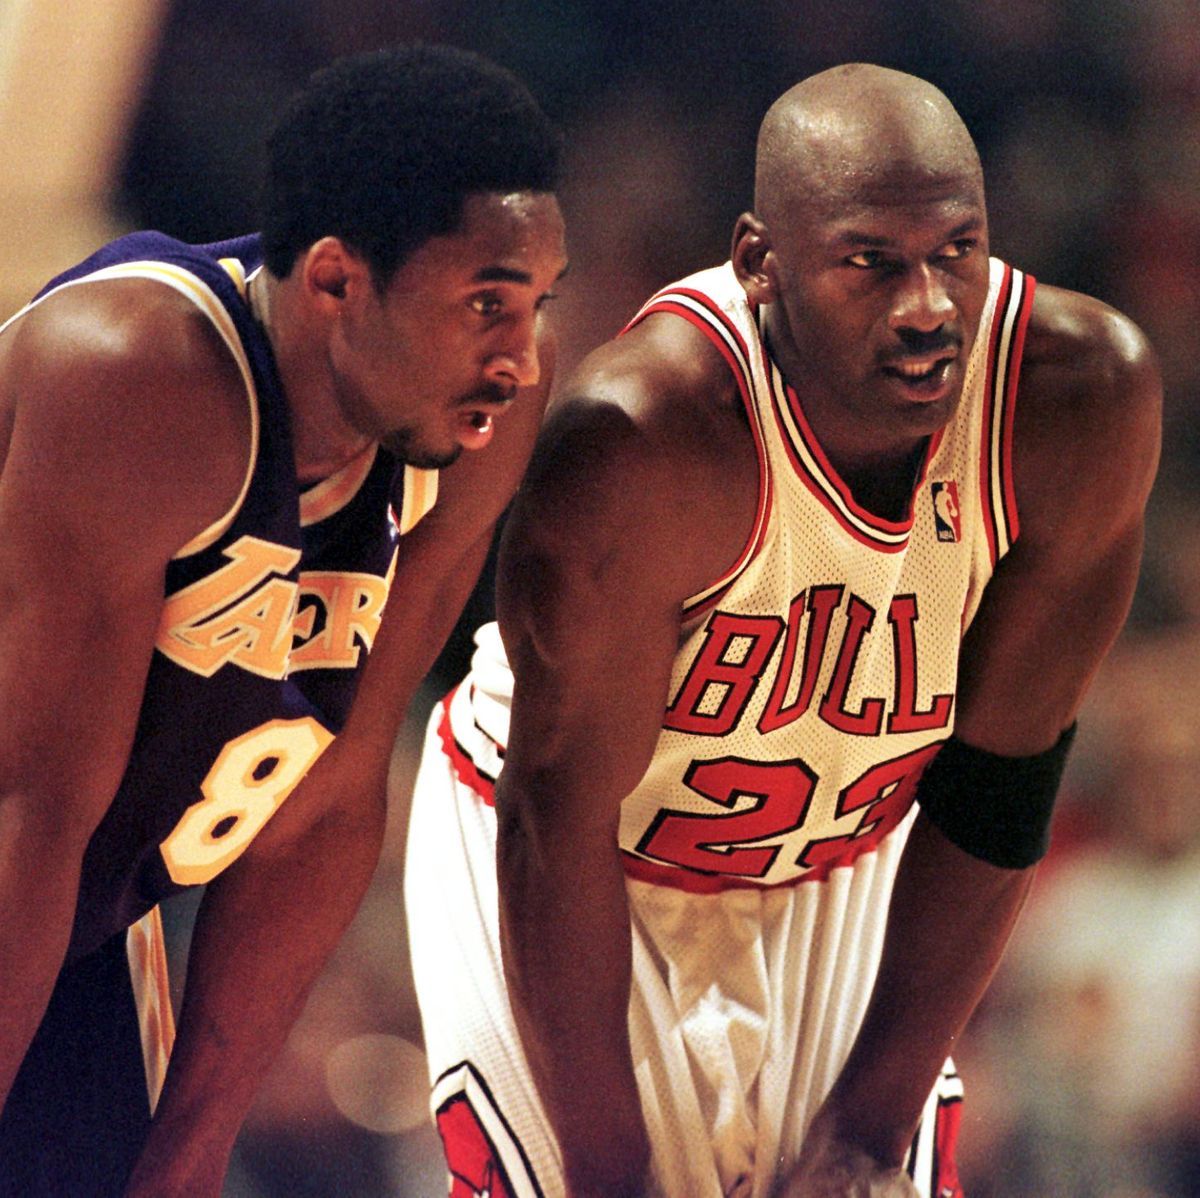  Kobe Bryant Hintergrundbild 1200x1198. Photo of Michael Jordan and Kobe Bryantrs